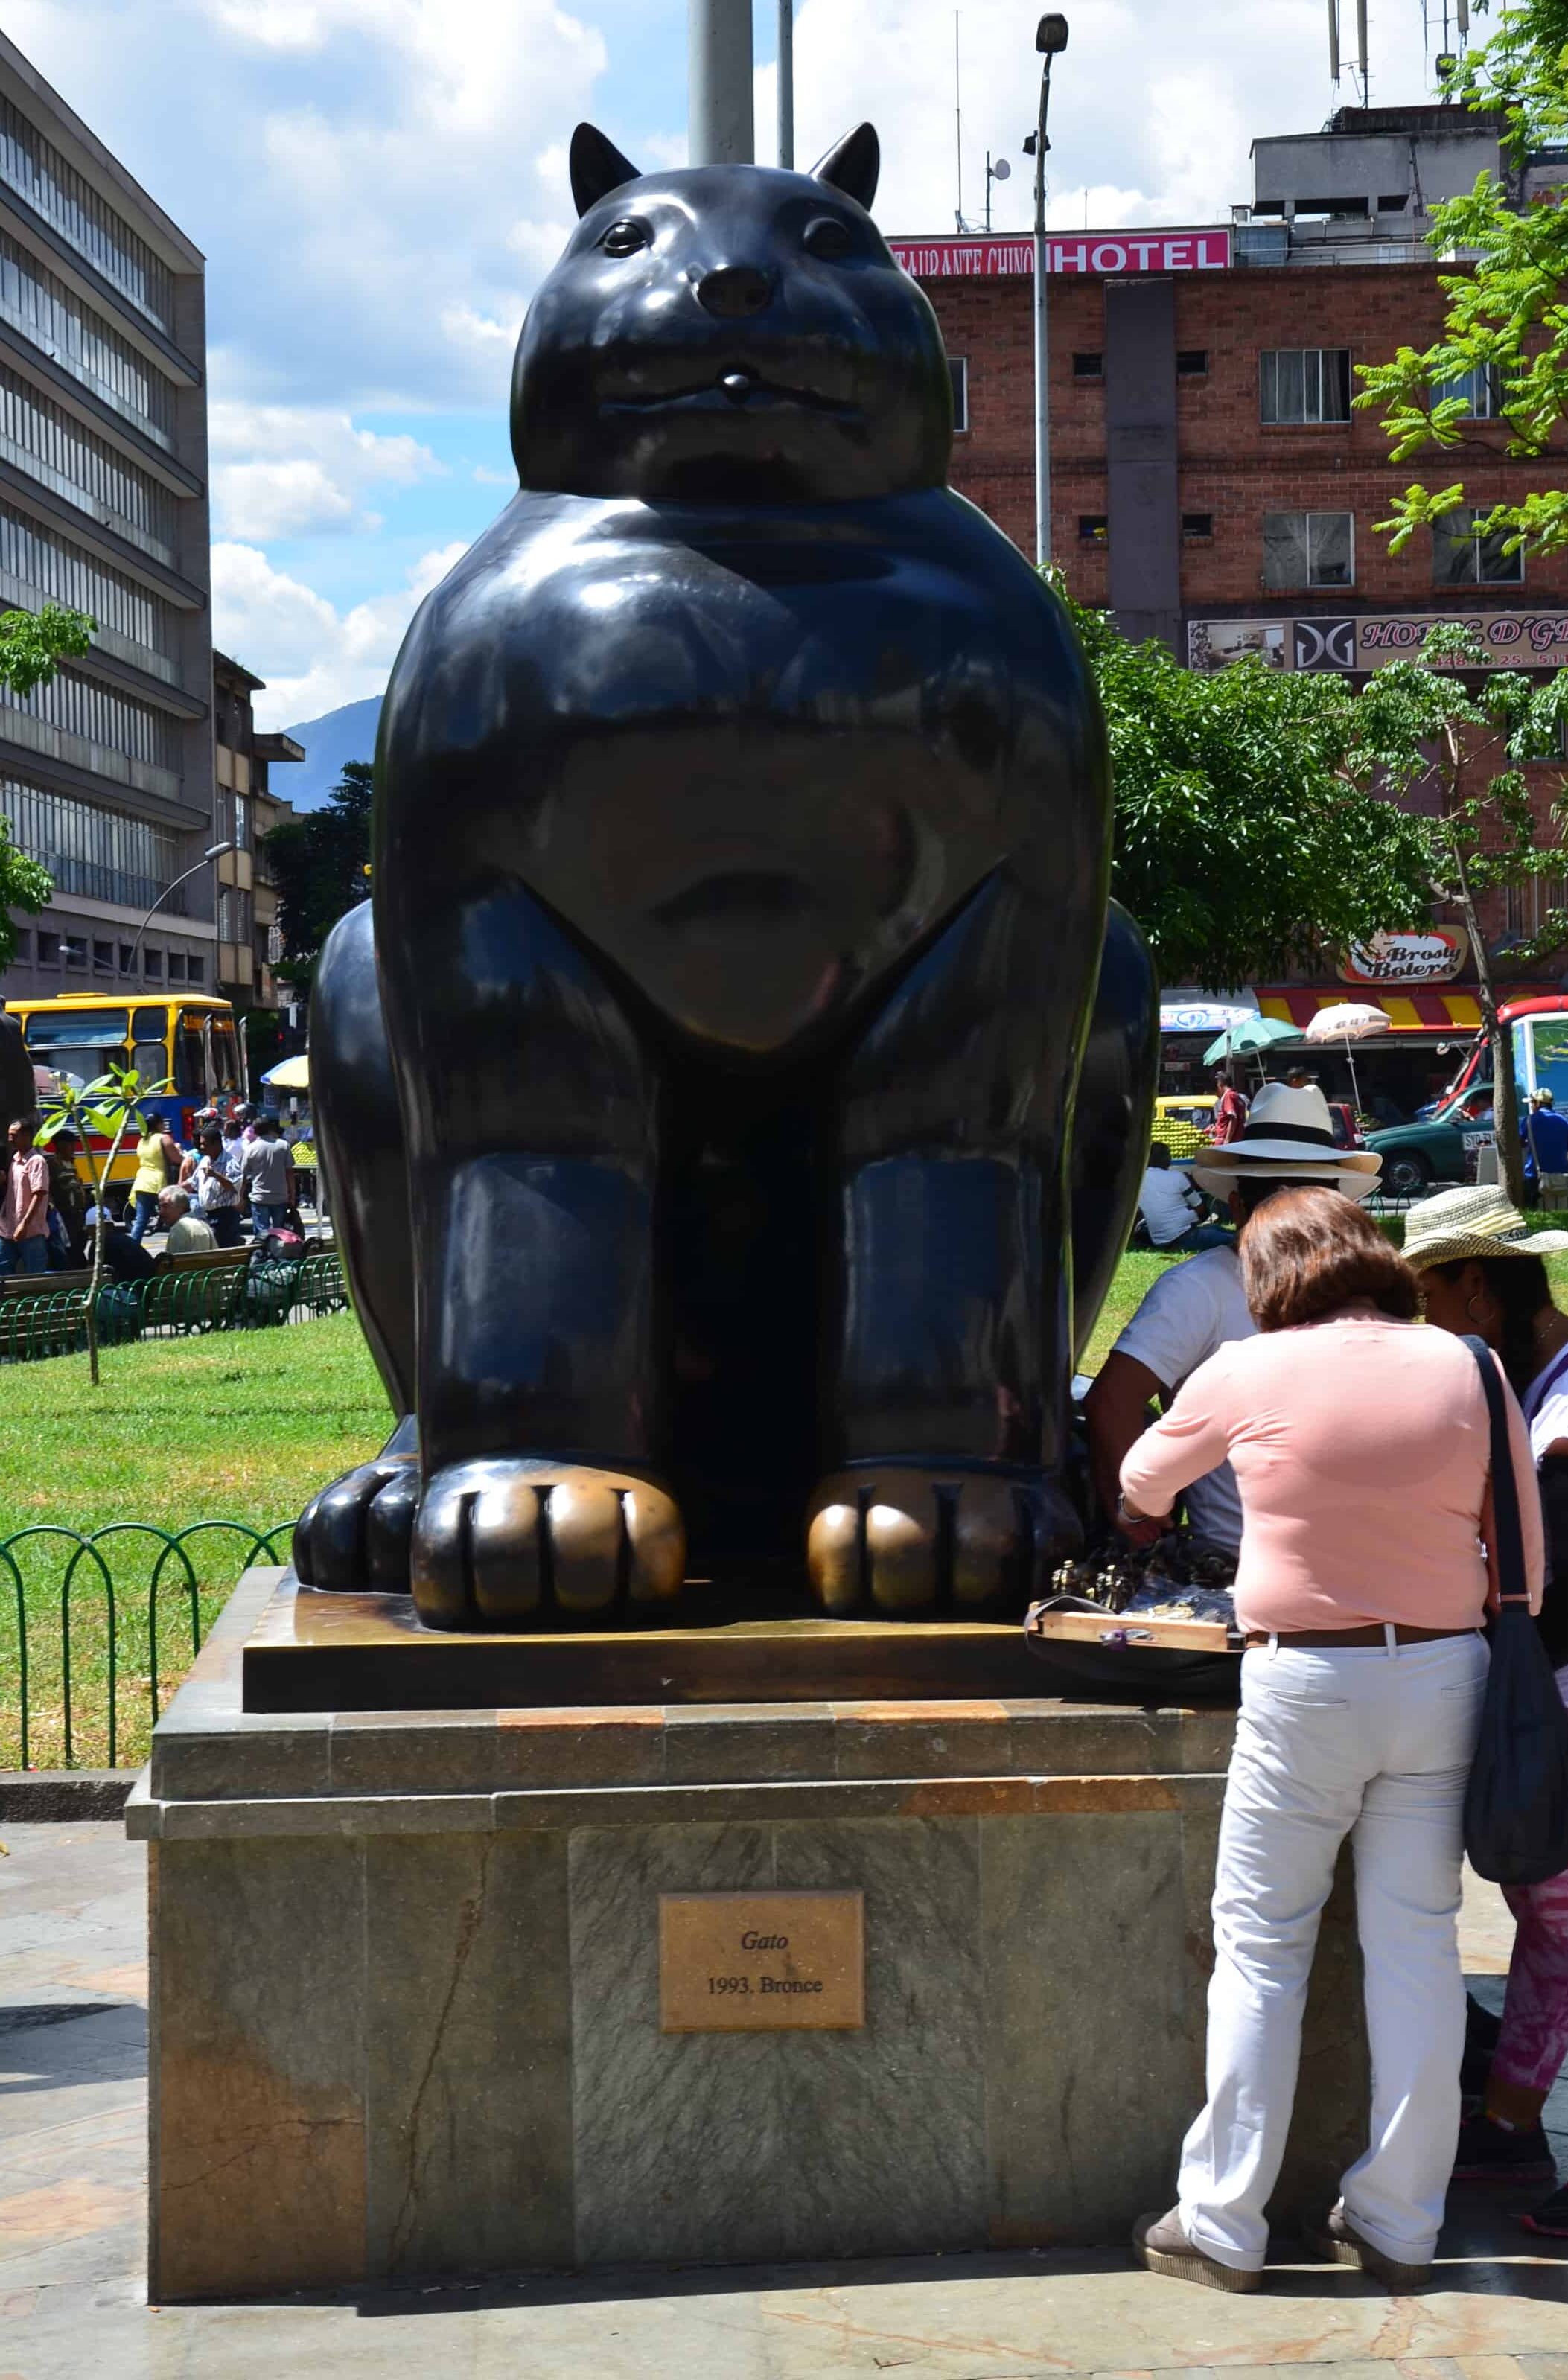 Gato (Cat) at Plaza Botero in Medellín, Antioquia, Colombia